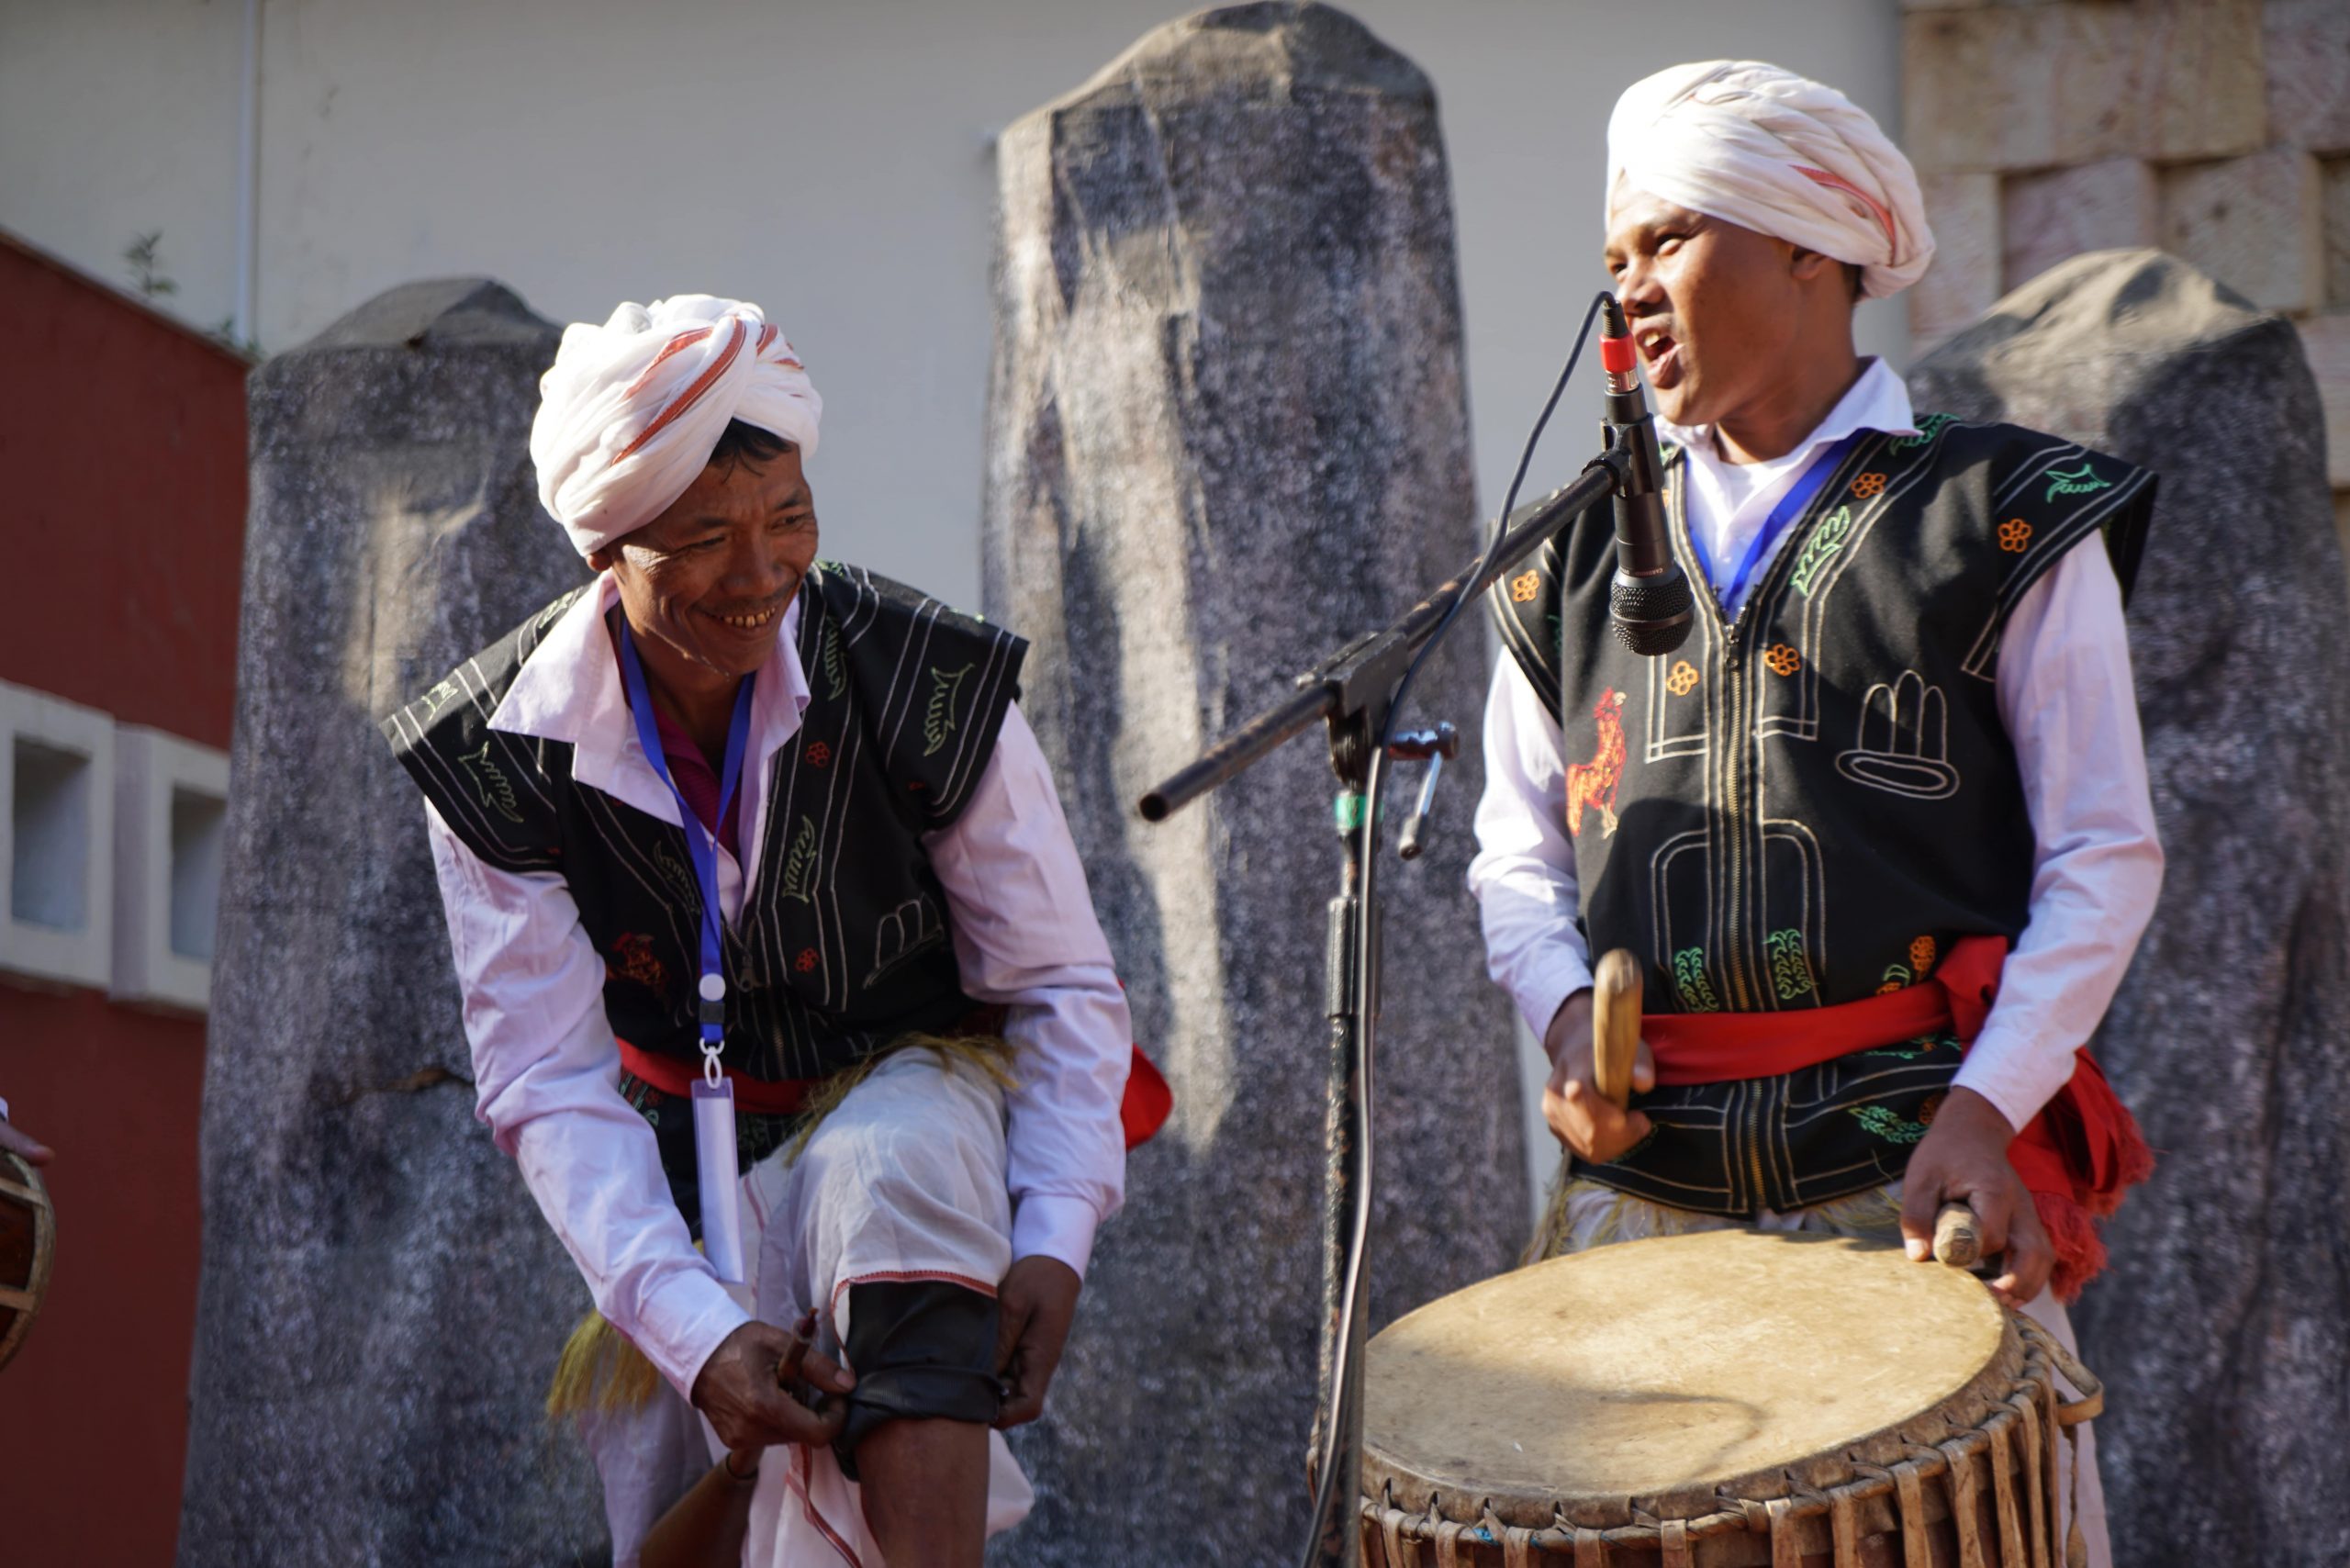 Singer at Meghalaya Festival tribe